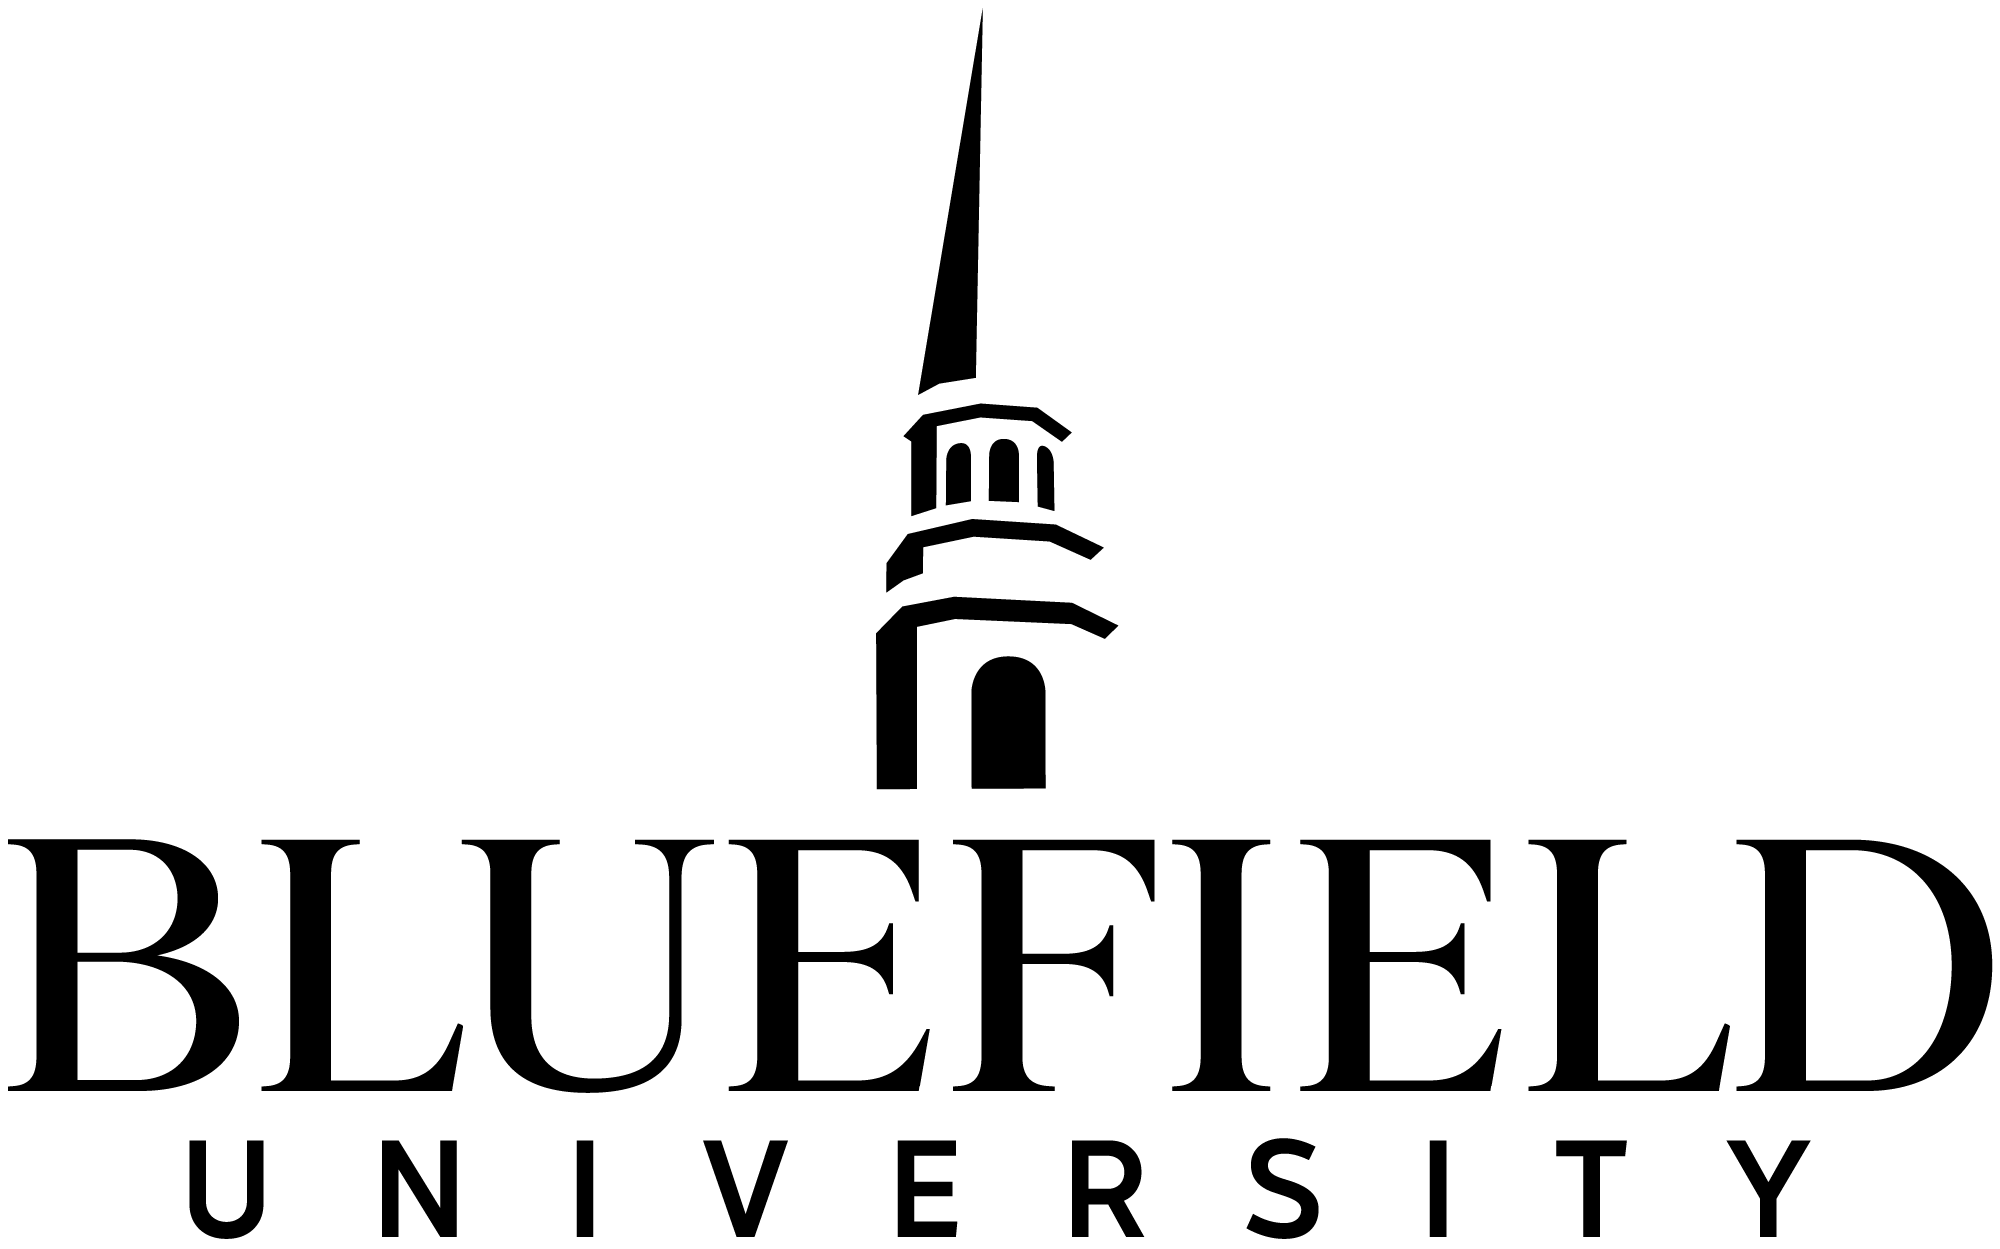 Full Bluefield University logo in black.